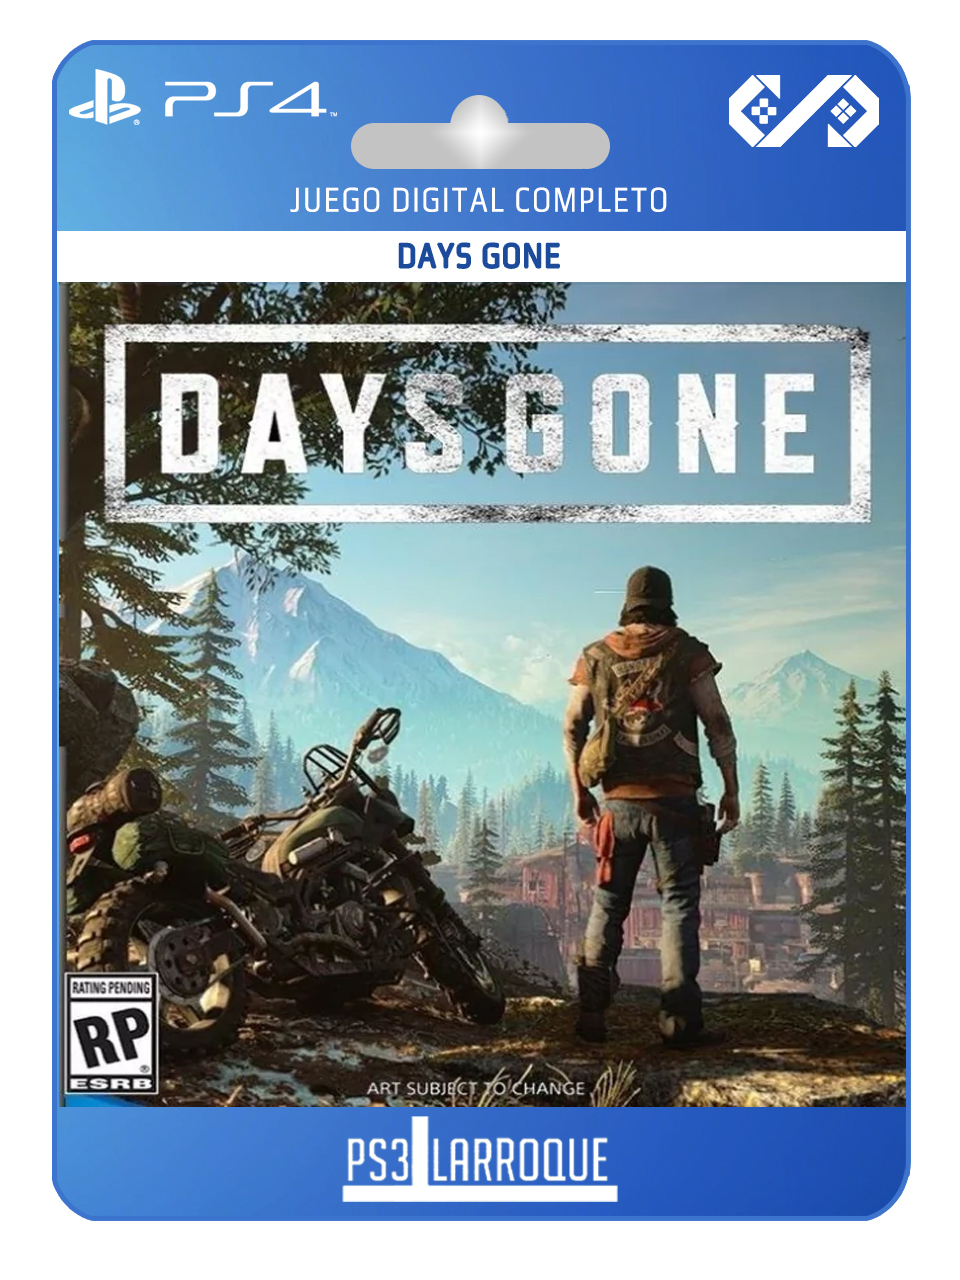 DAYS GONE PS5, PS3 Digital Perú, Venta de Juegos Digitales Perú